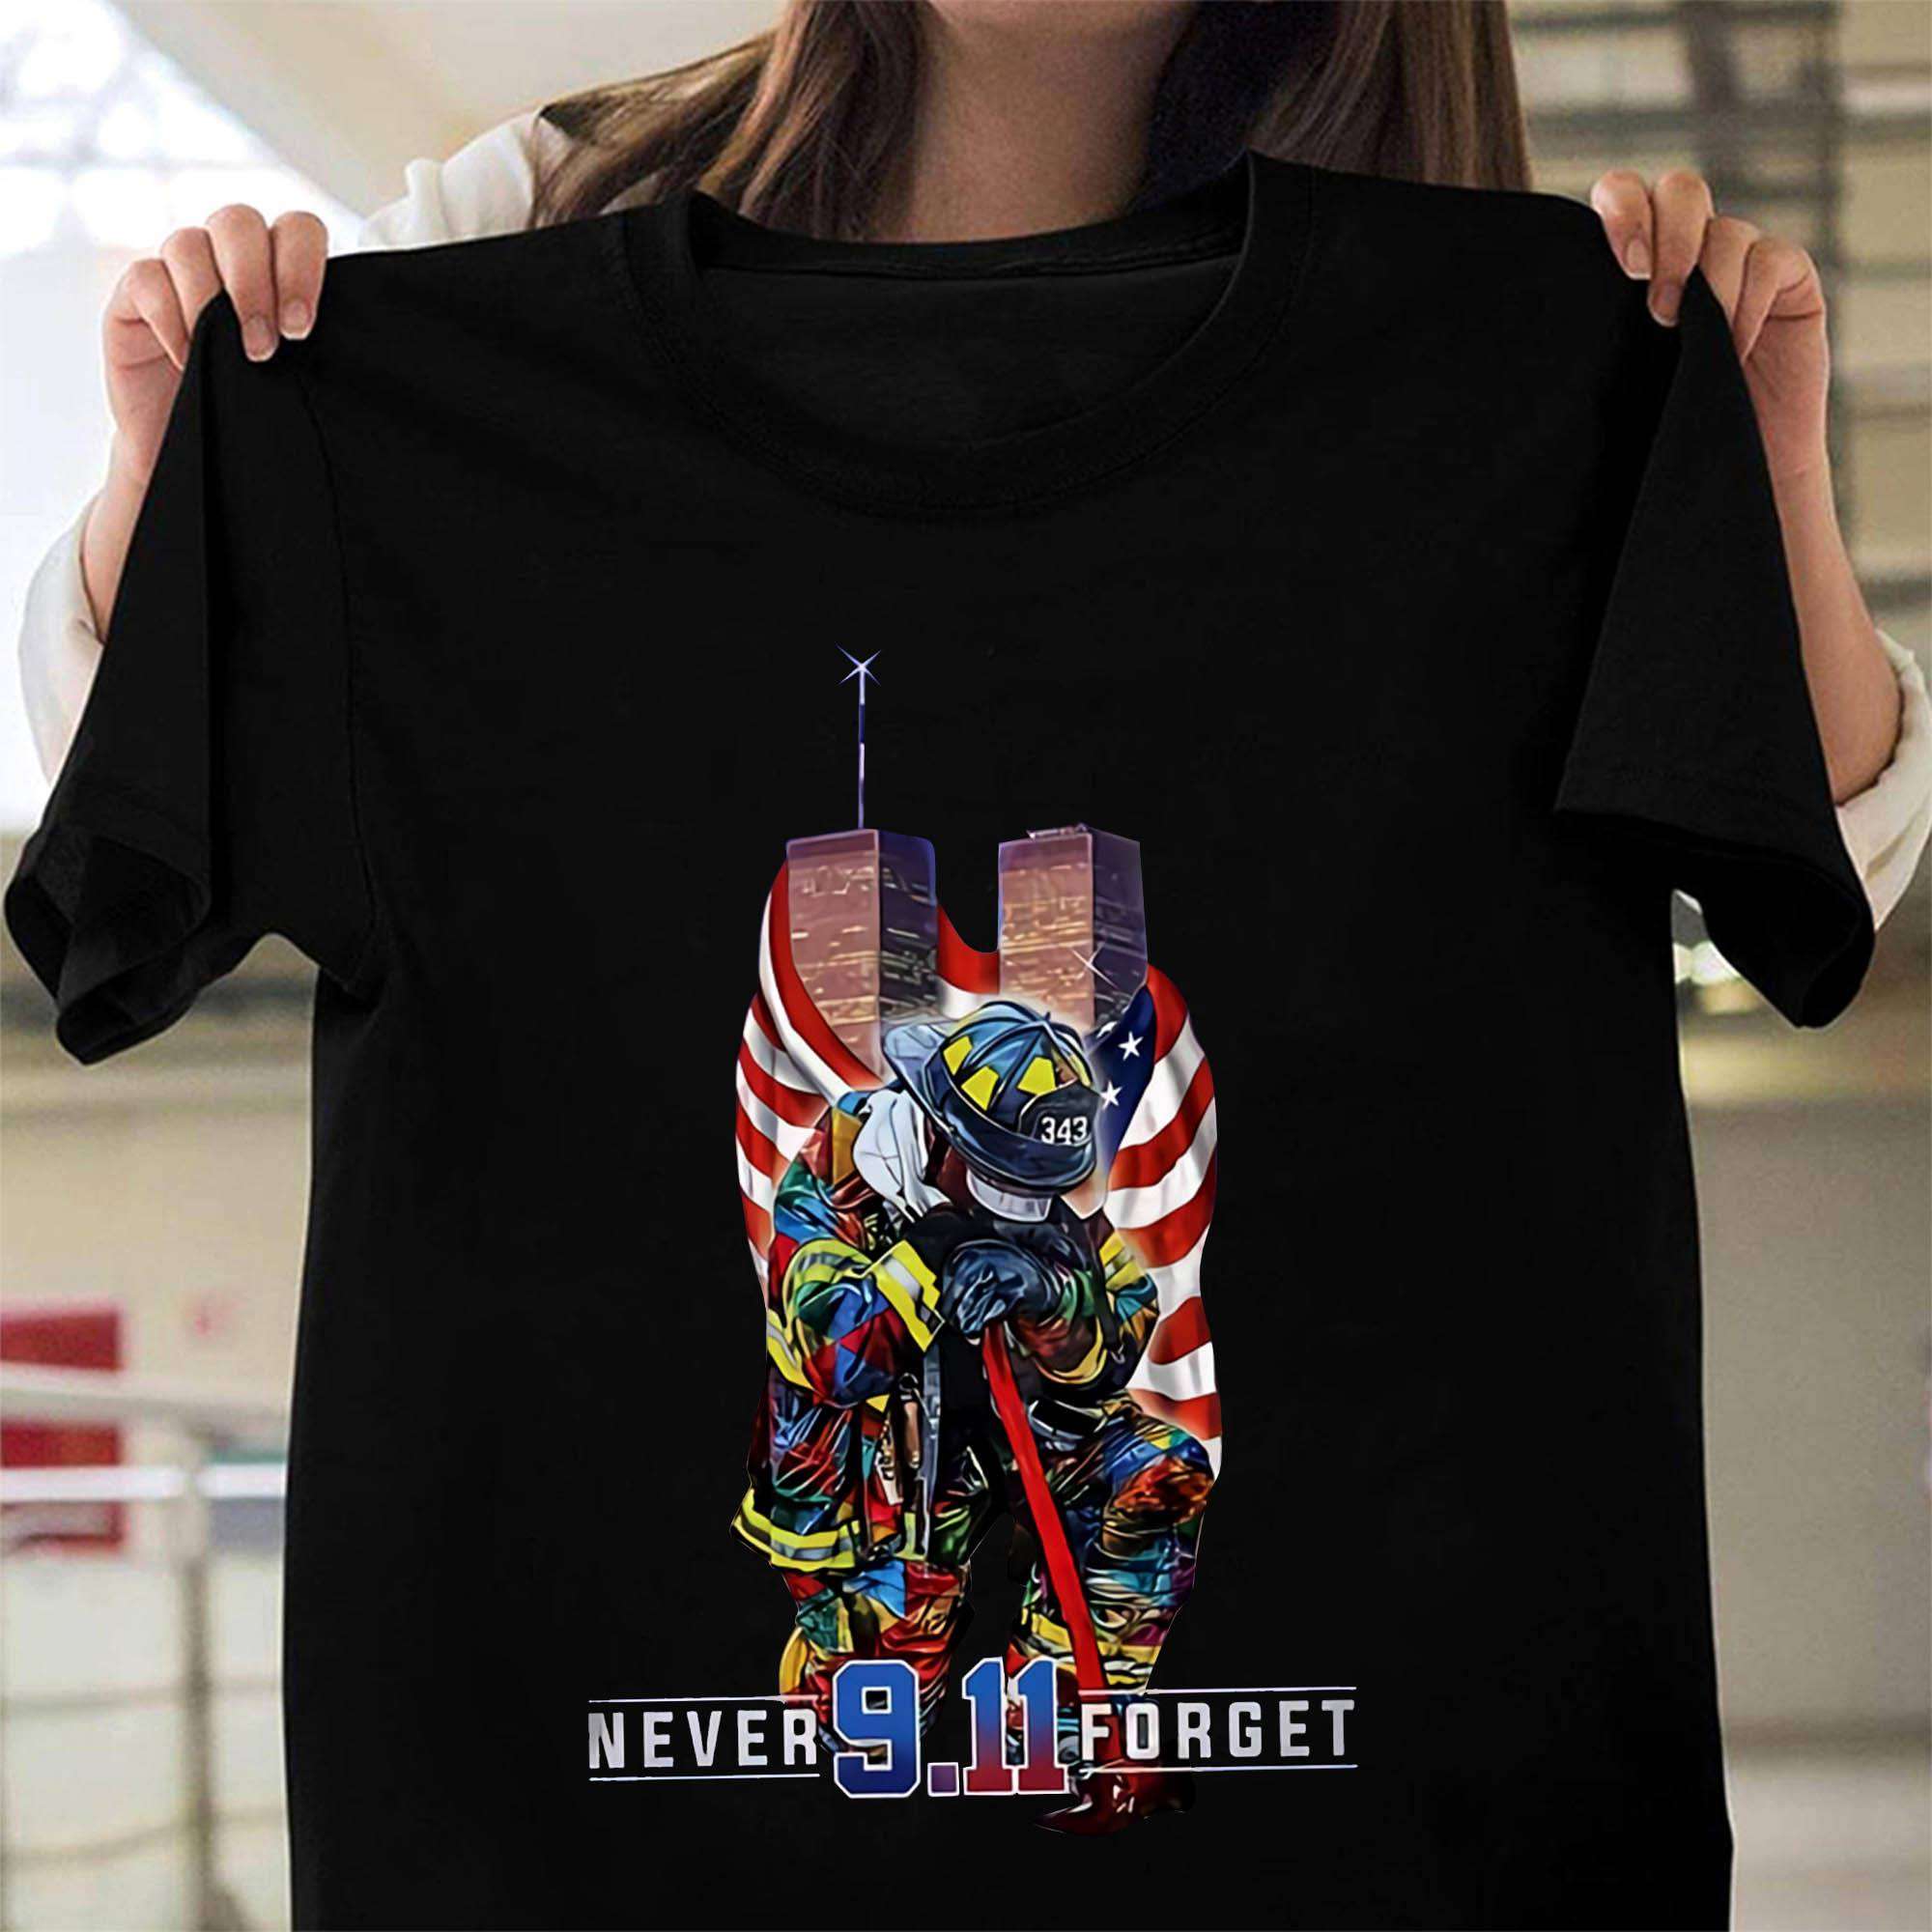 Never forget 9.11 - September 11, America Terrorist attack